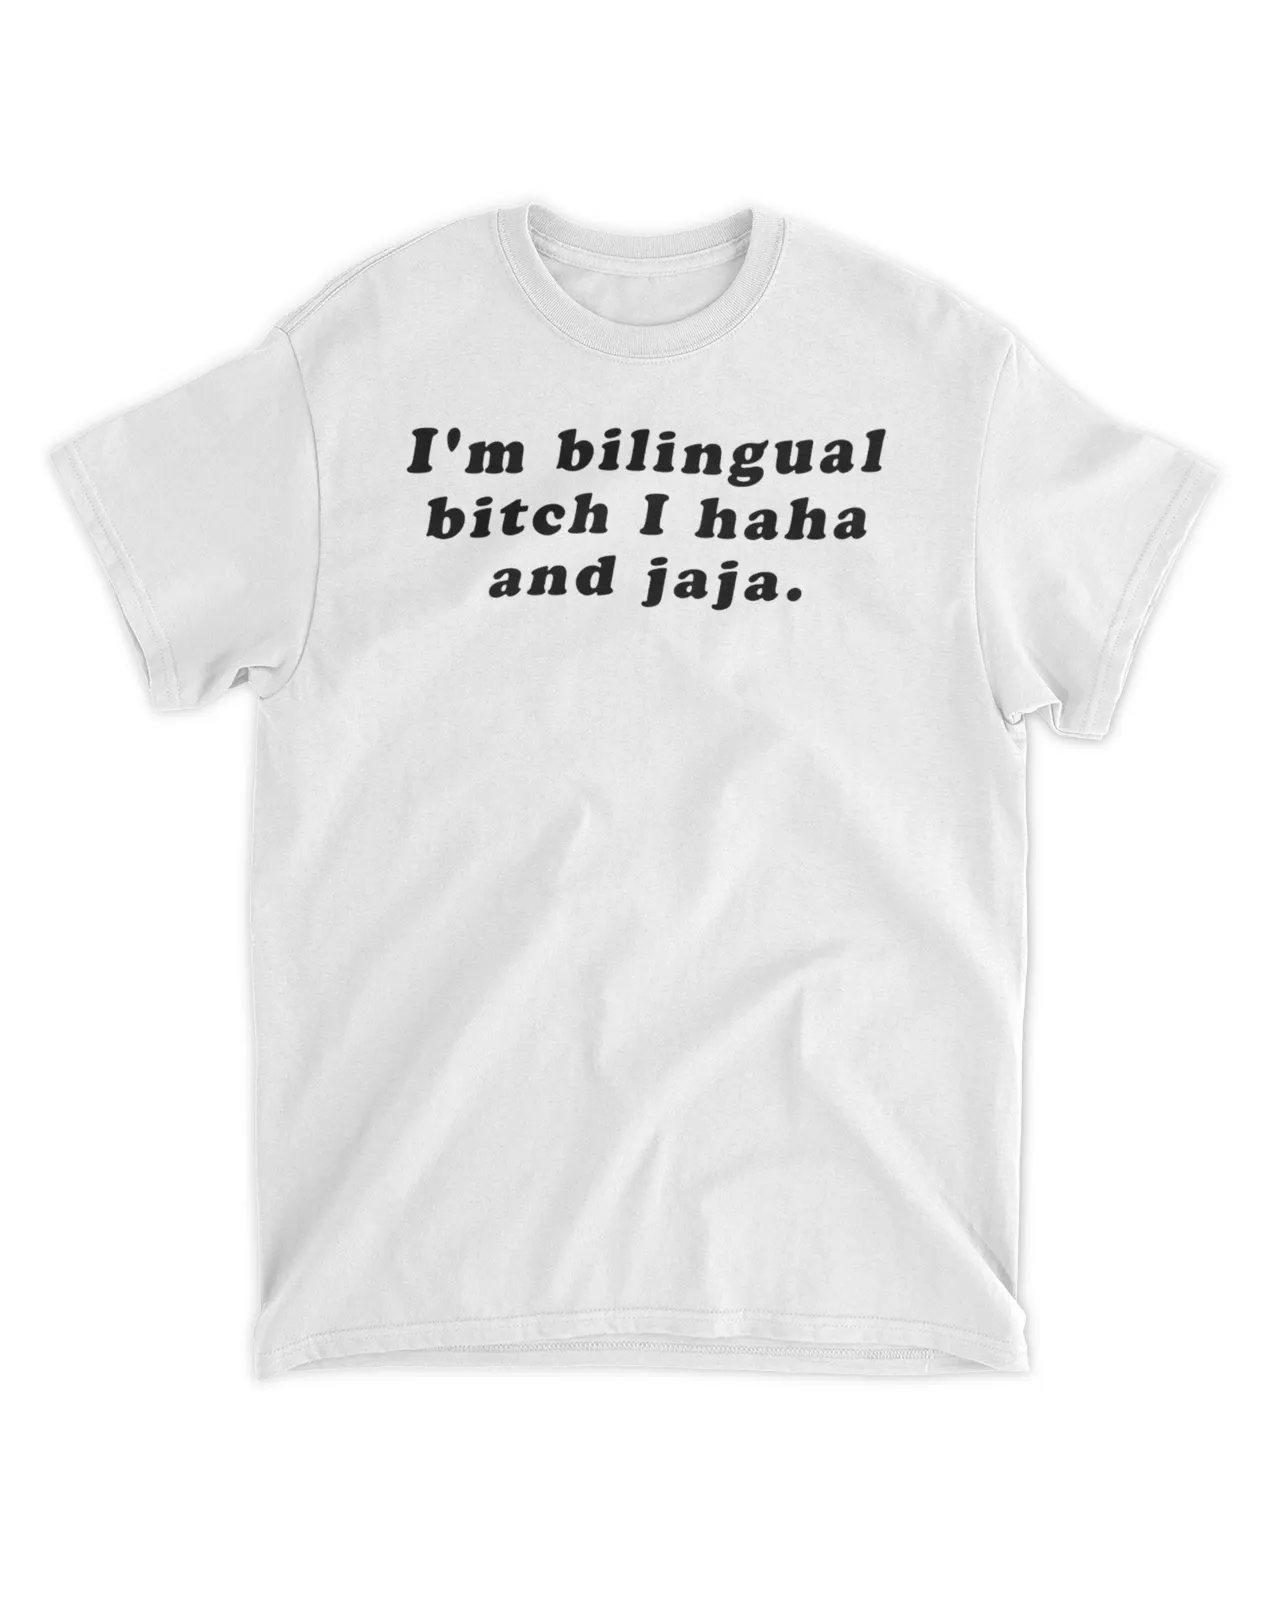  I'm bilingual bitch I haha and jaja shirt